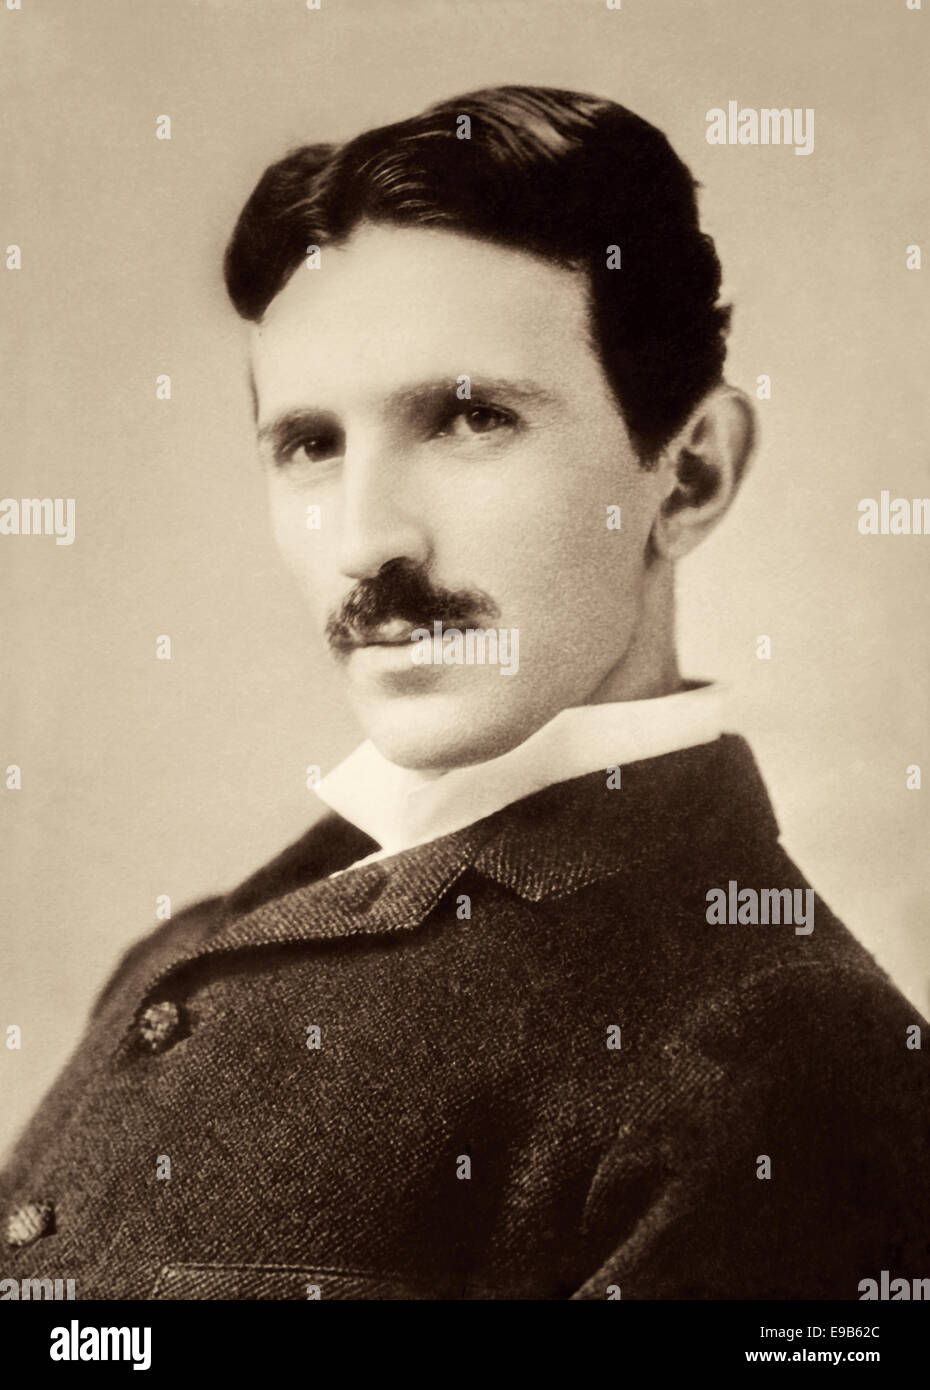 1890 Portrait of Nikola Tesla (age 34), Serbian American inventor, electrical engineer, mechanical engineer, and futurist. Stock Photo